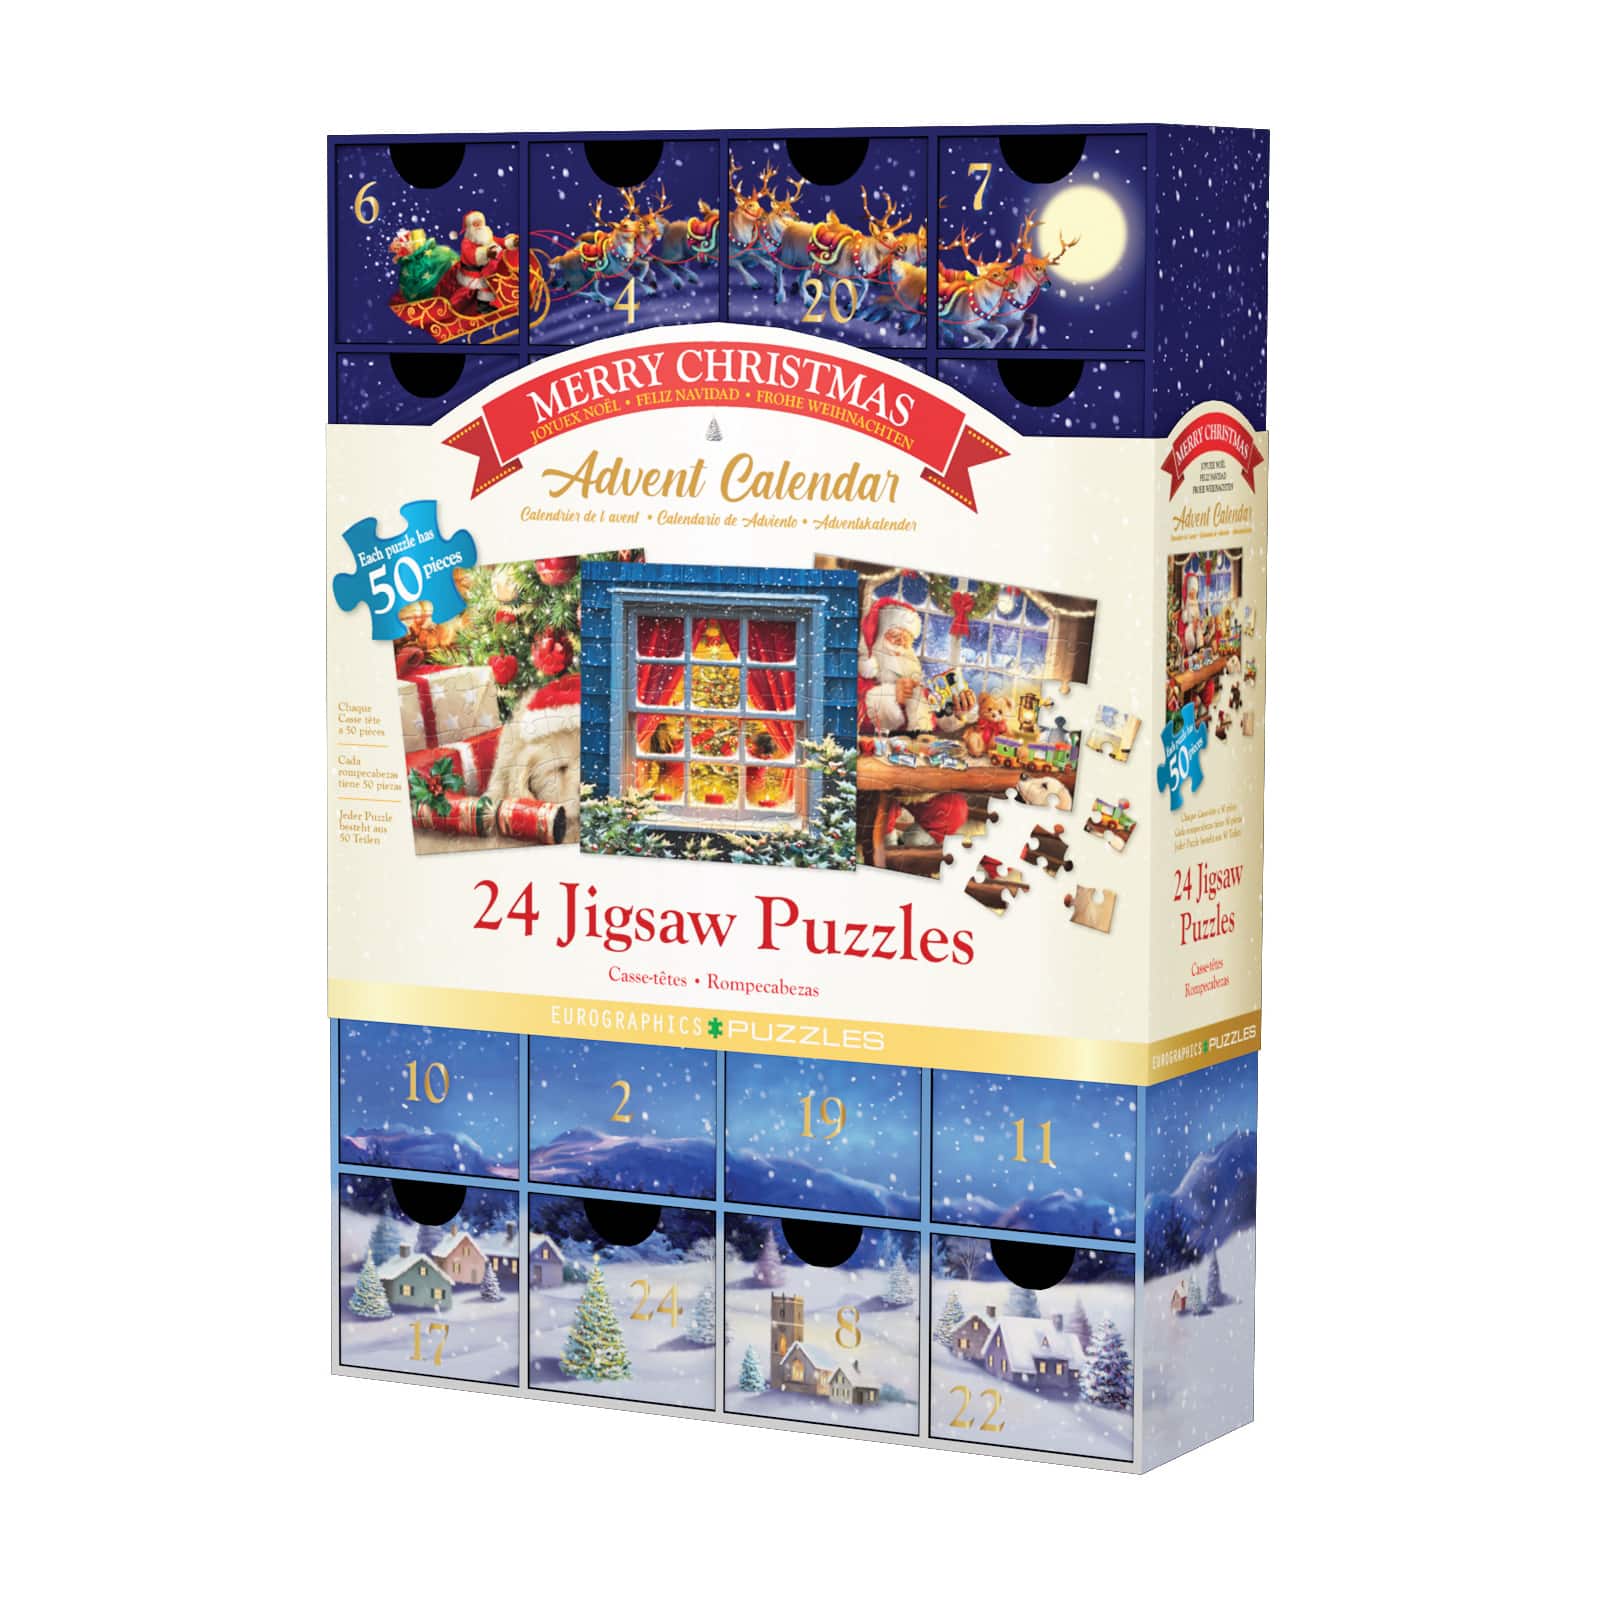 Merry Christmas Advent Calendar - 24 Jigsaw Puzzles: 24 x 50 Pcs